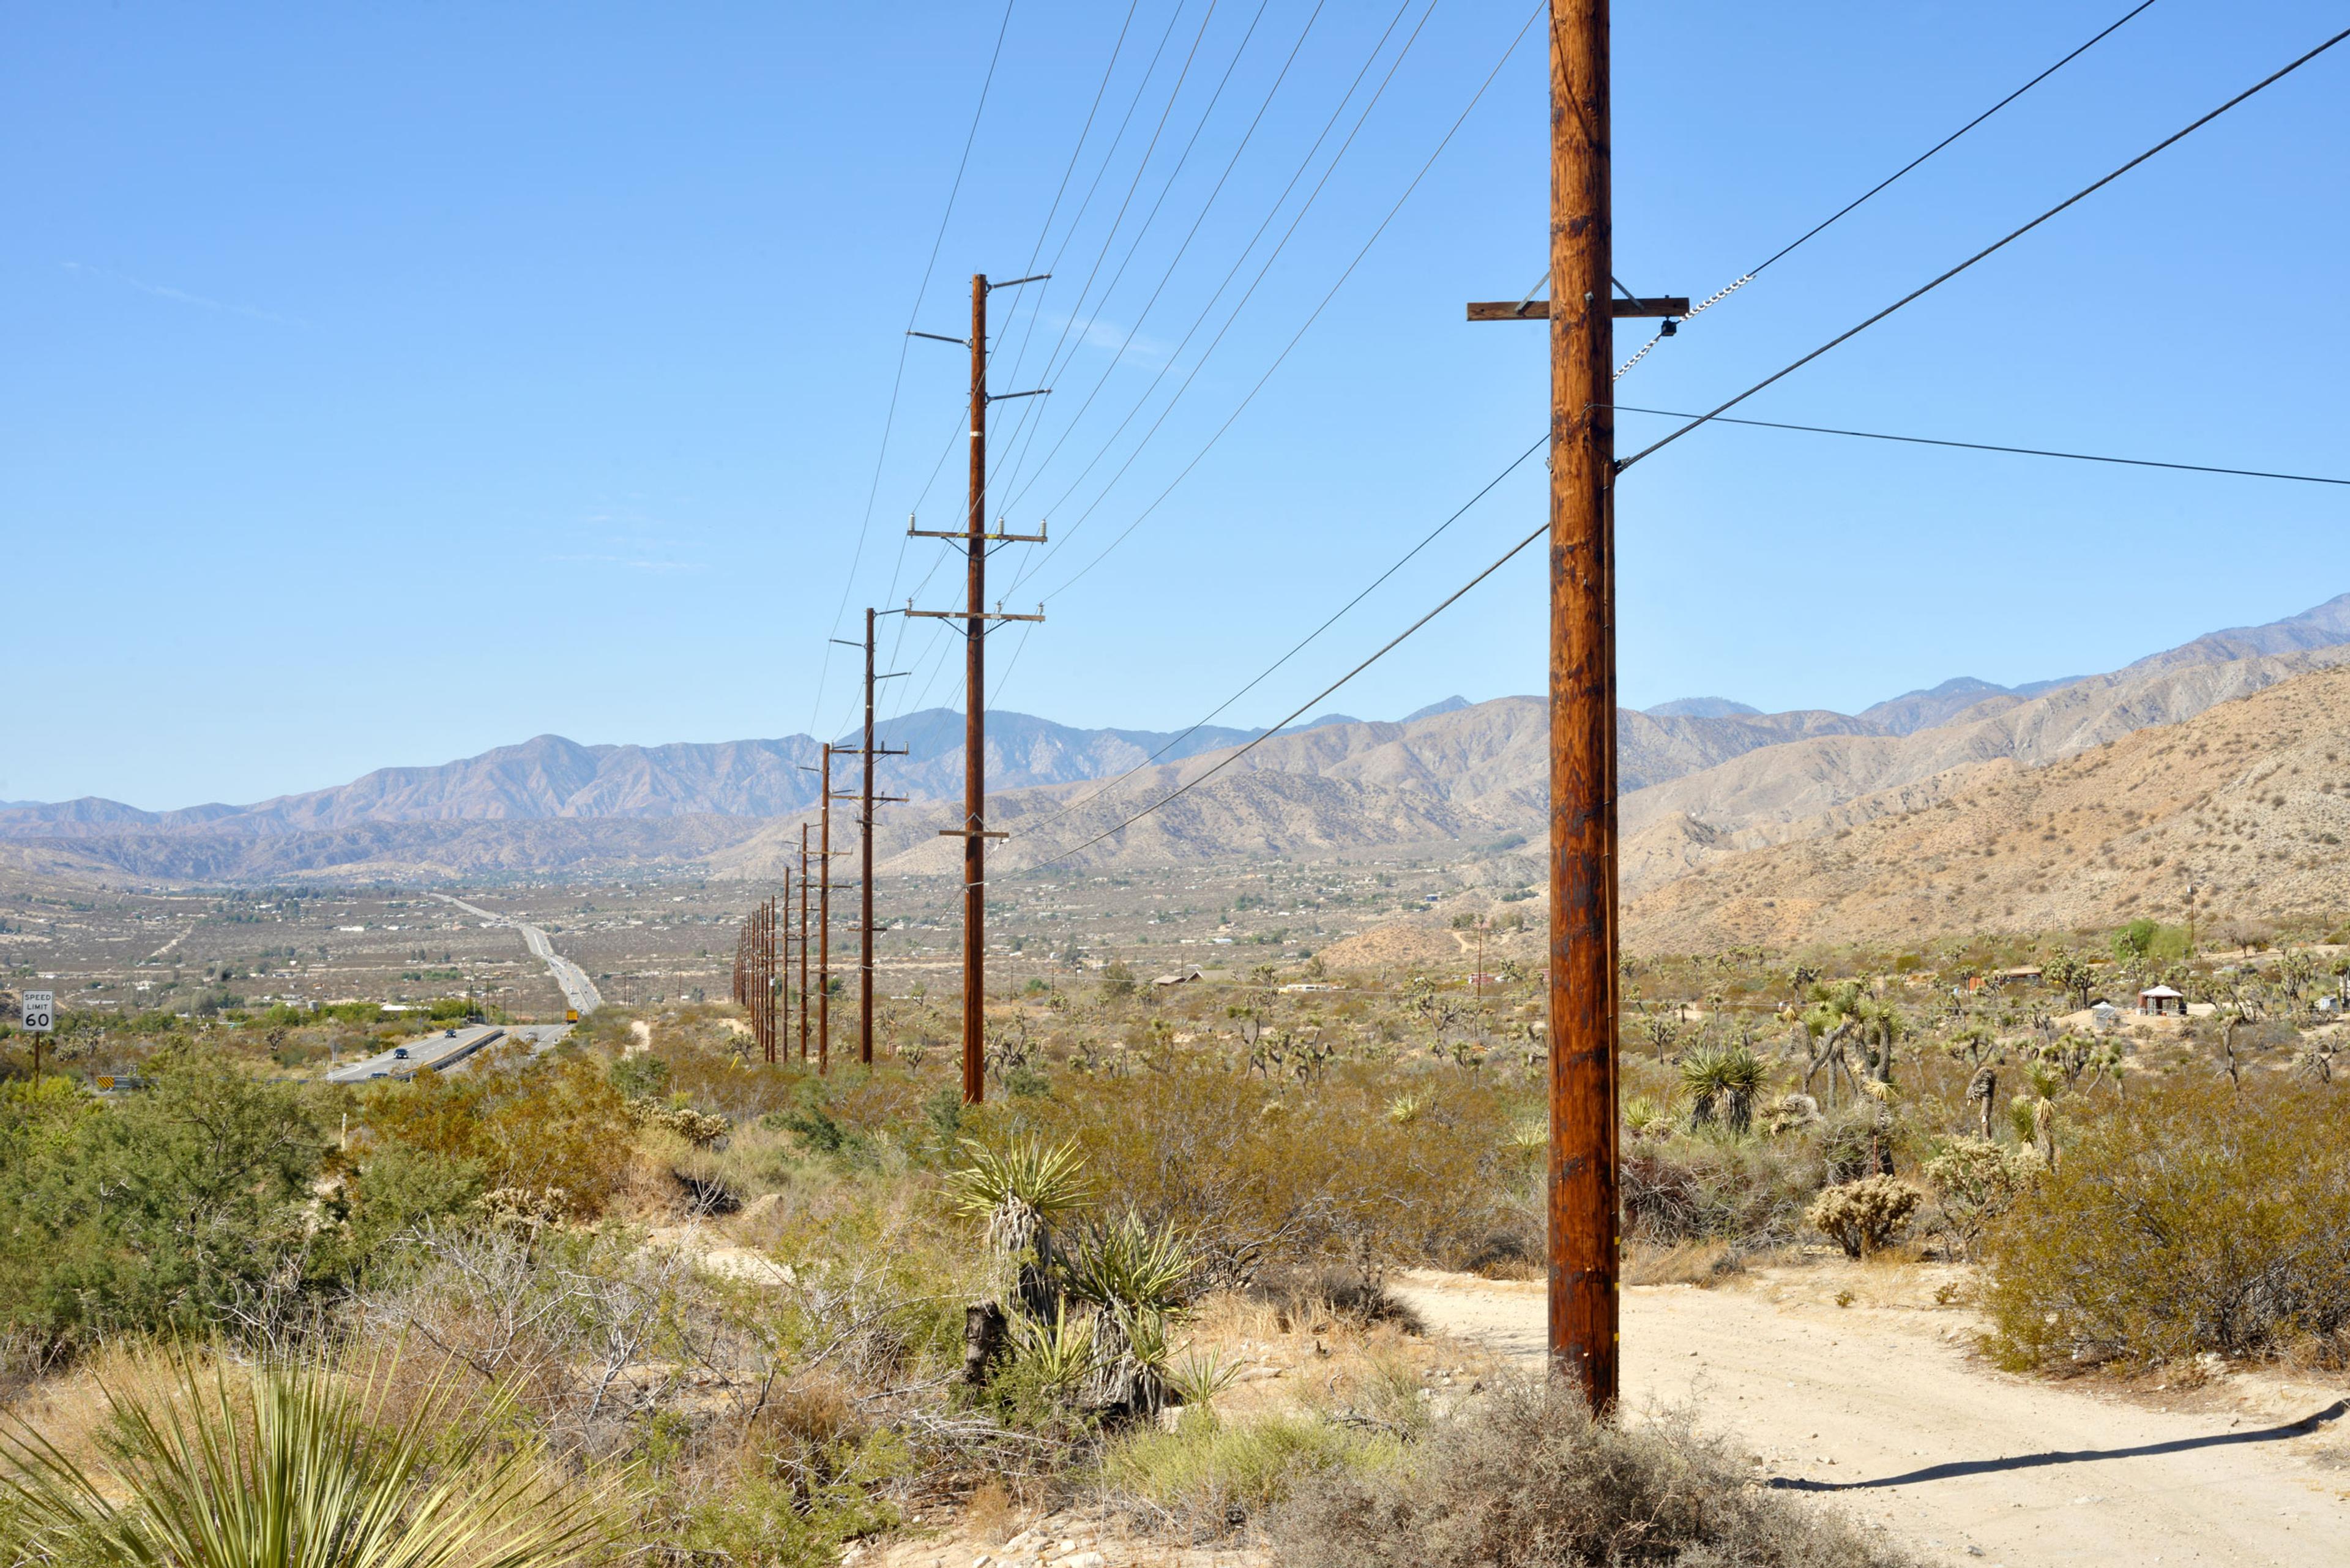 Utility poles in the desert